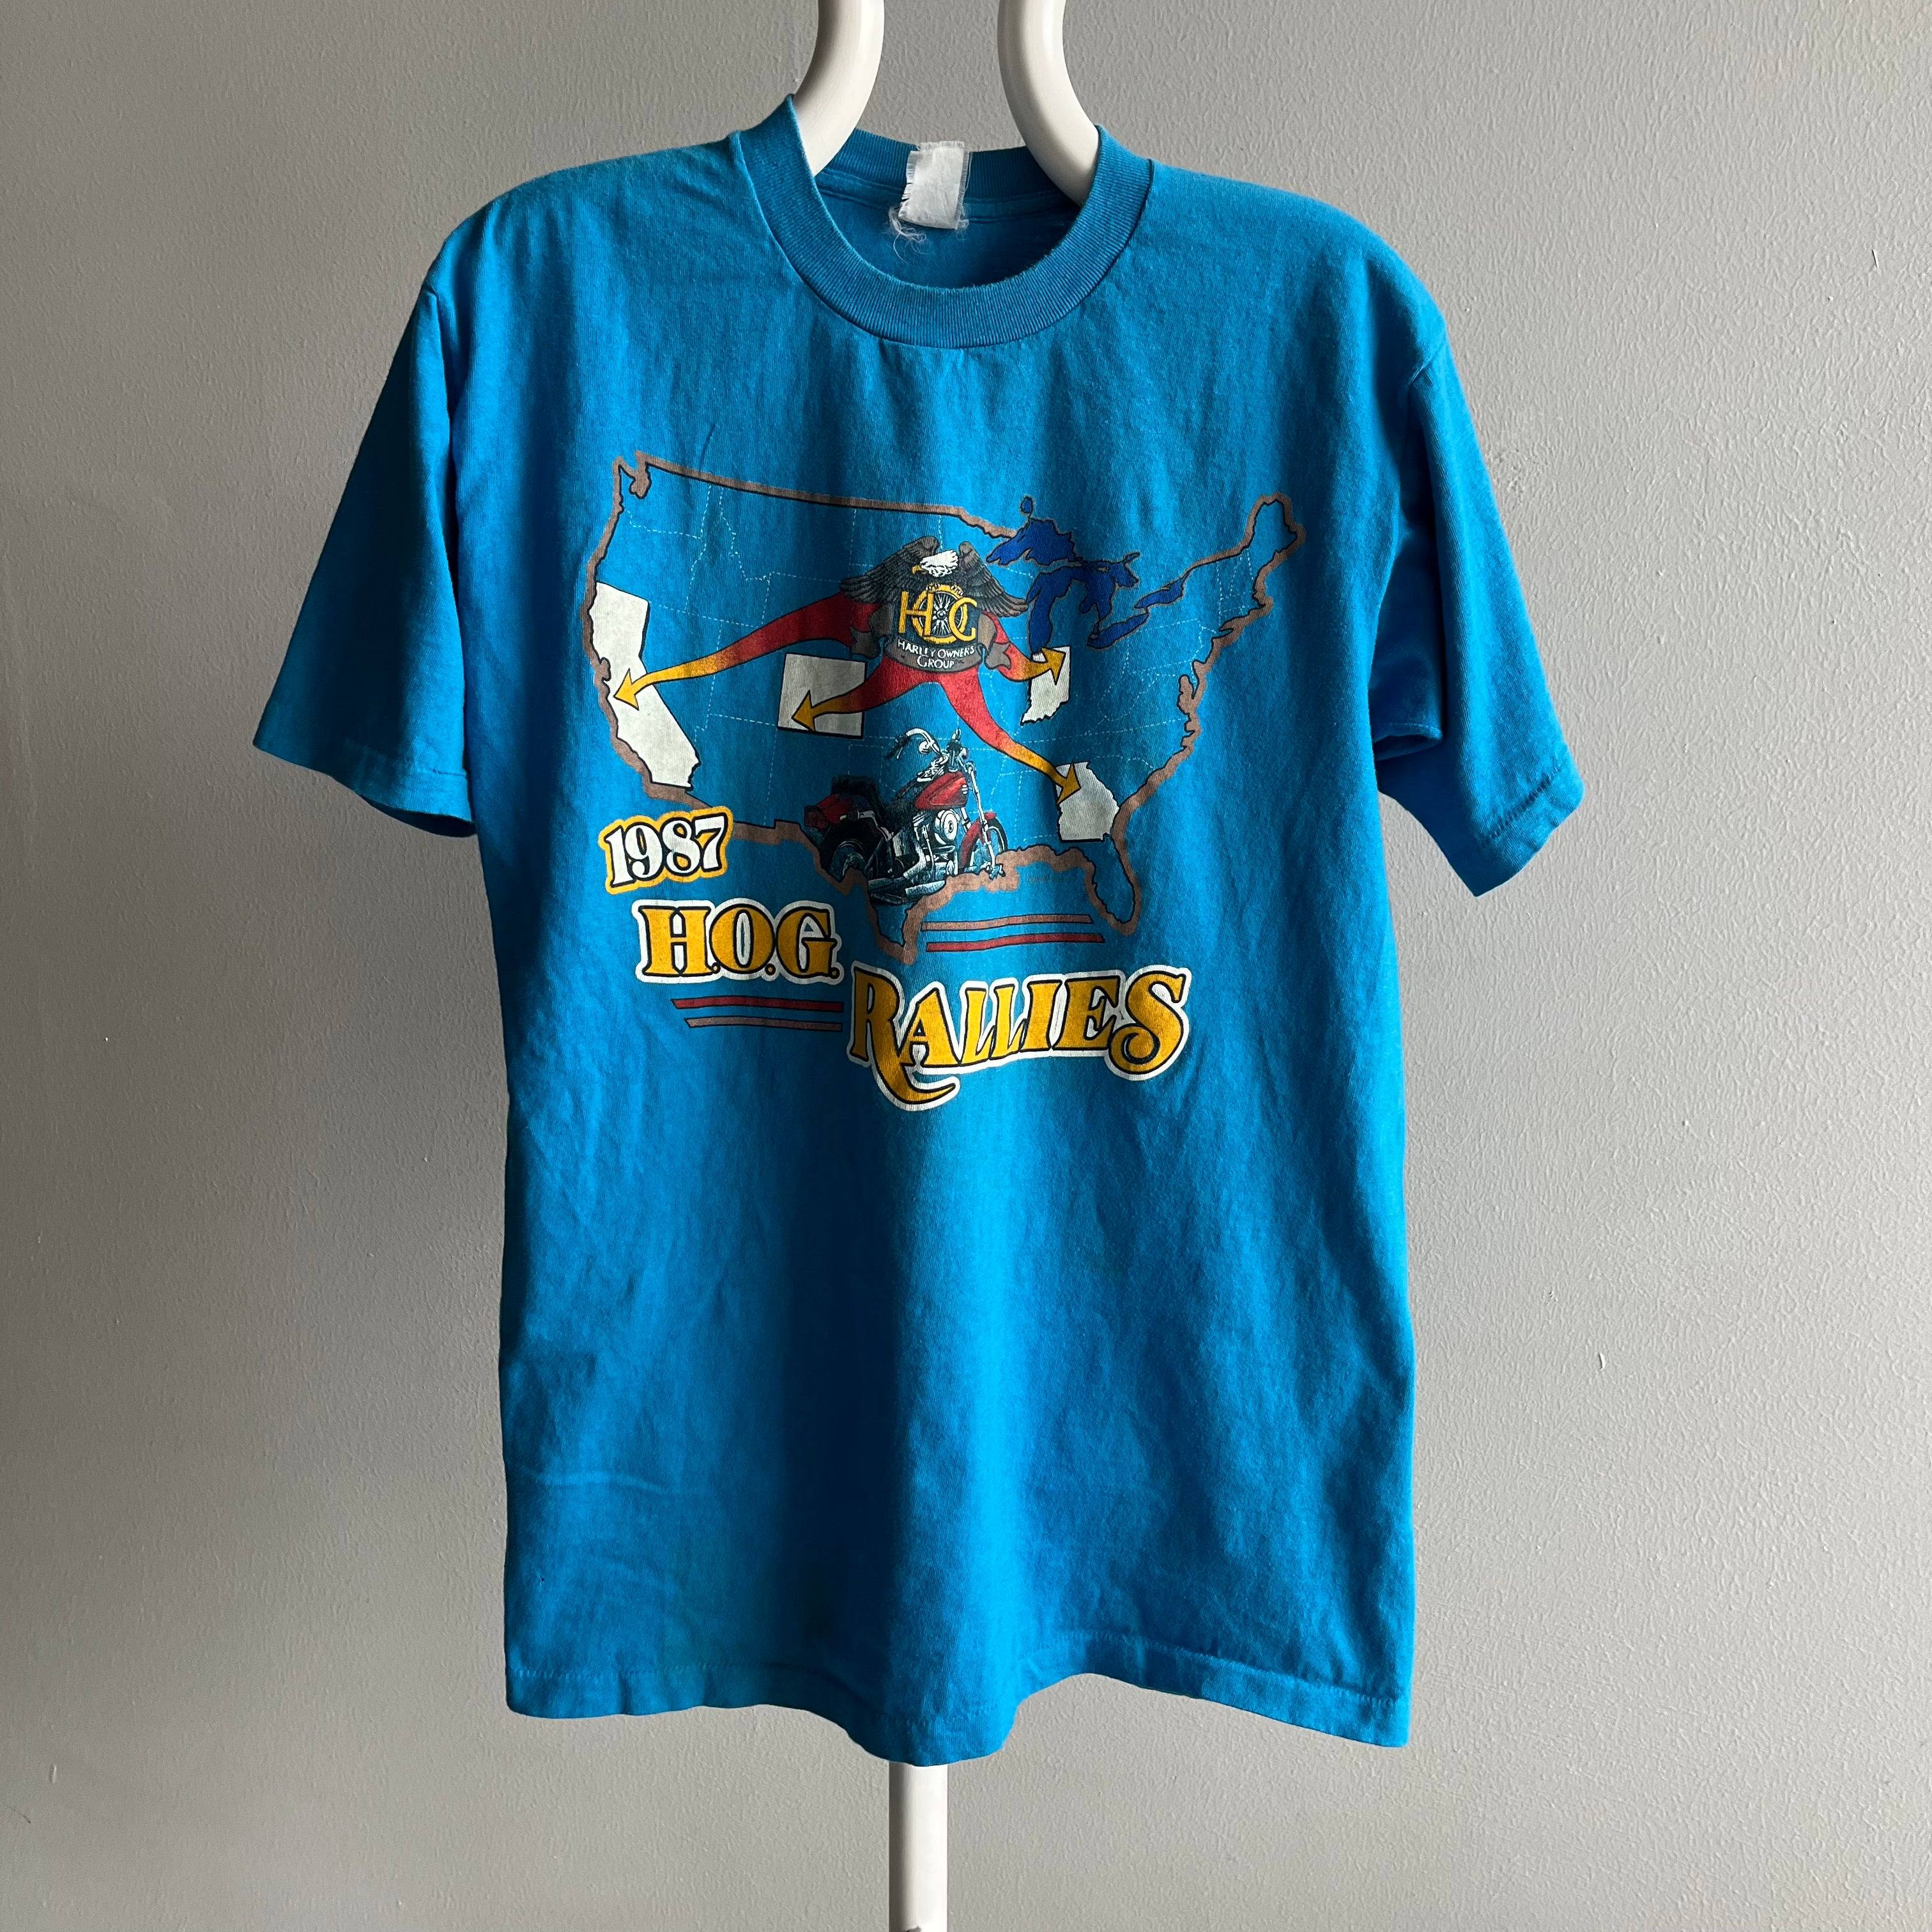 1987 H.O.G. Rallies Harley T-Shirt - WOWZA